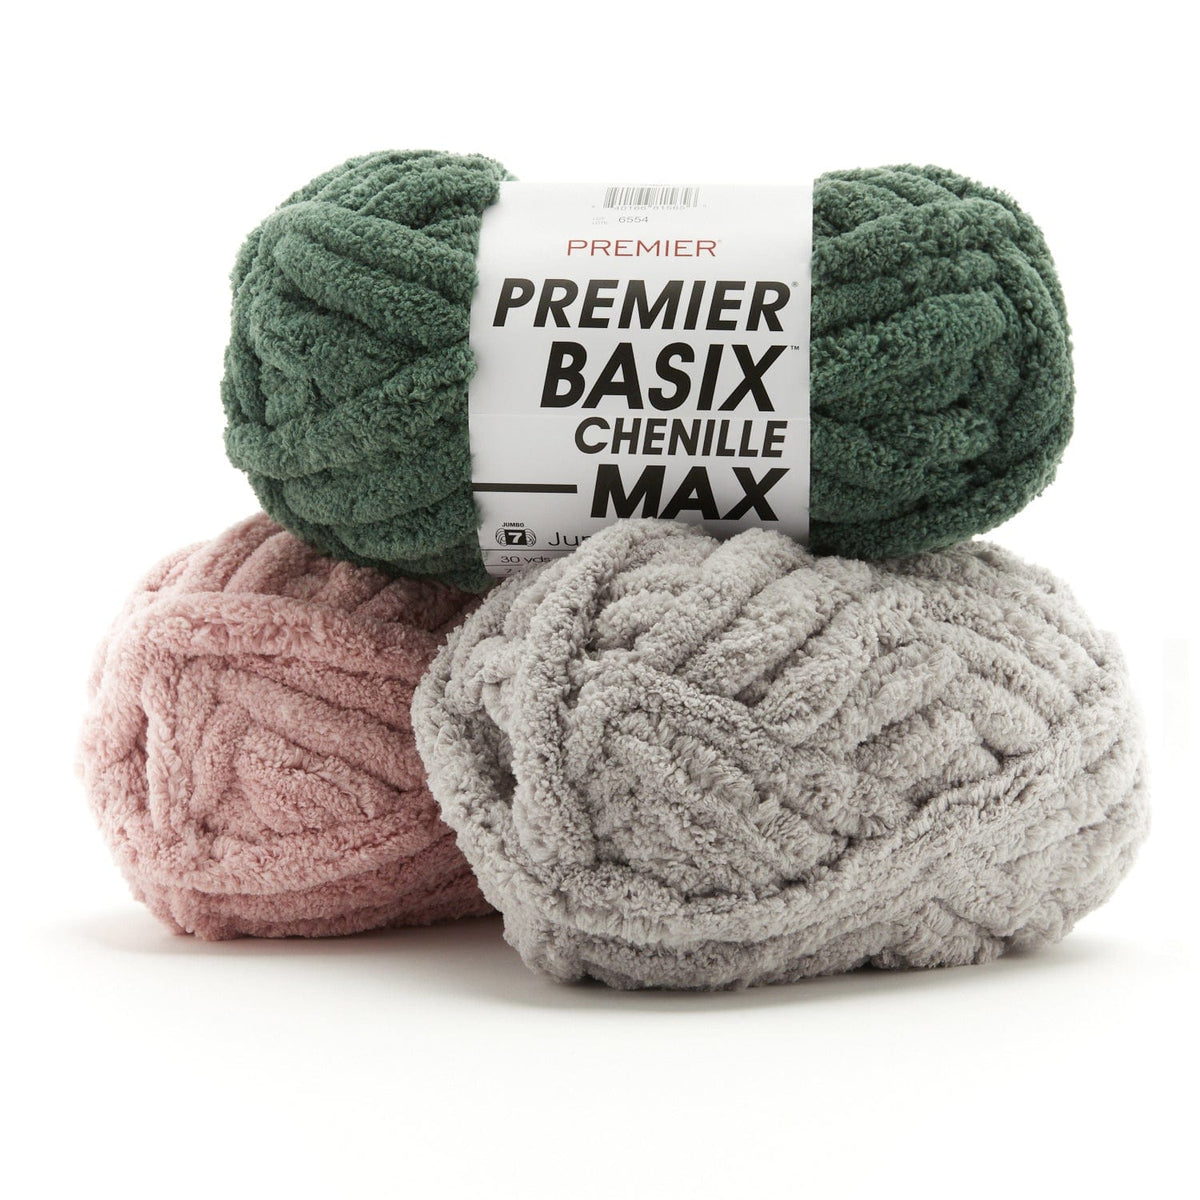 Premier Basix Chenille Max-Bag of 3 Yarn Pack